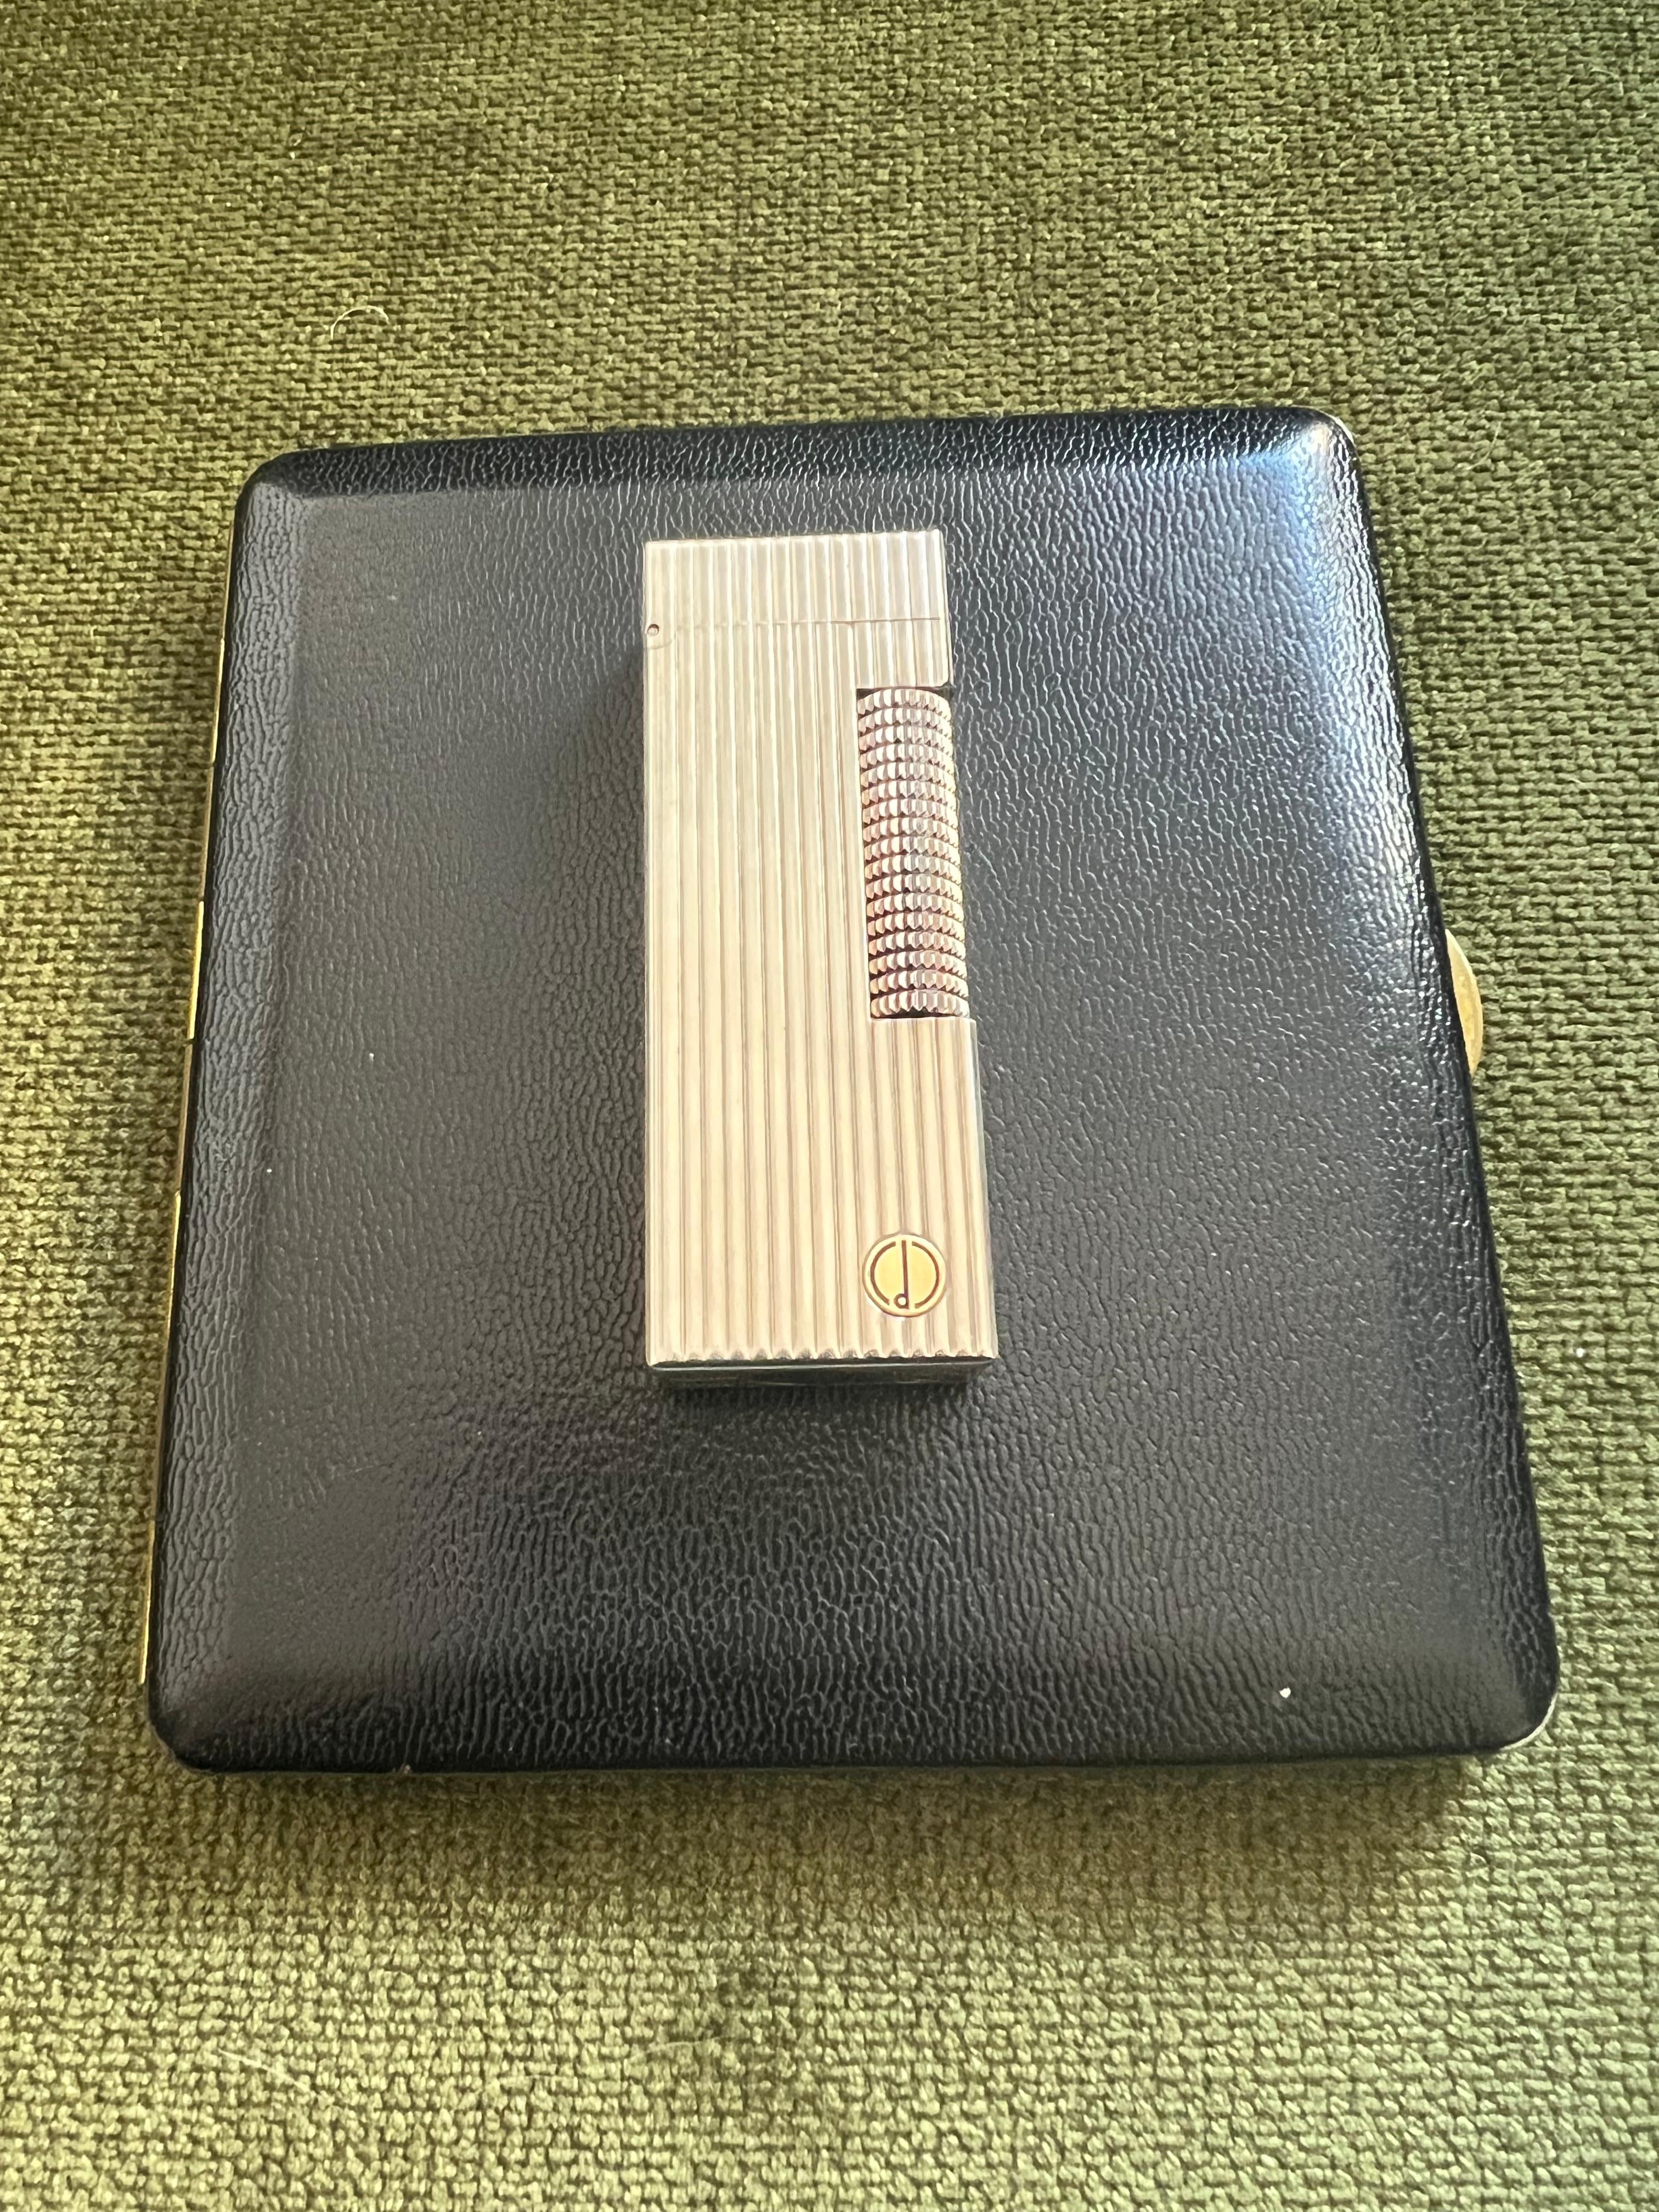 Vintage Dunhill Cigarette Case & Dunhill Gold Plated Lighter Set,  Circa 1970 For Sale 1